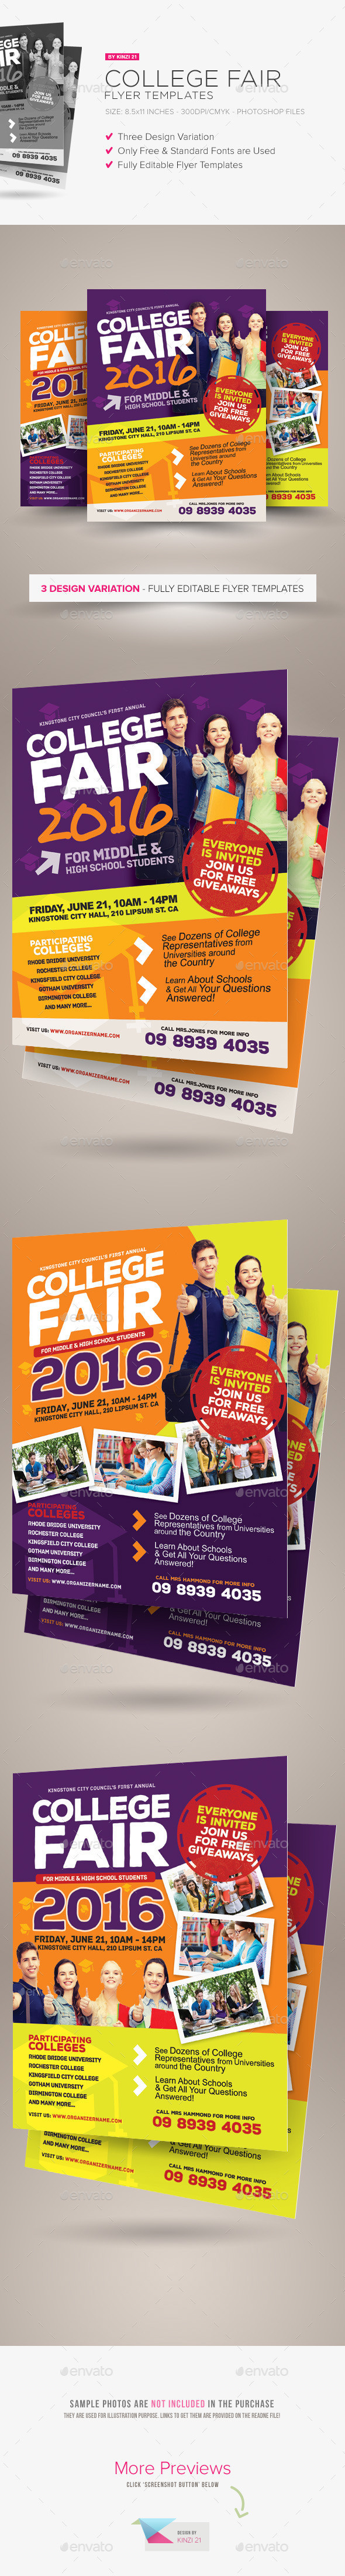 Graphic river college fair flyer templates kinzi21